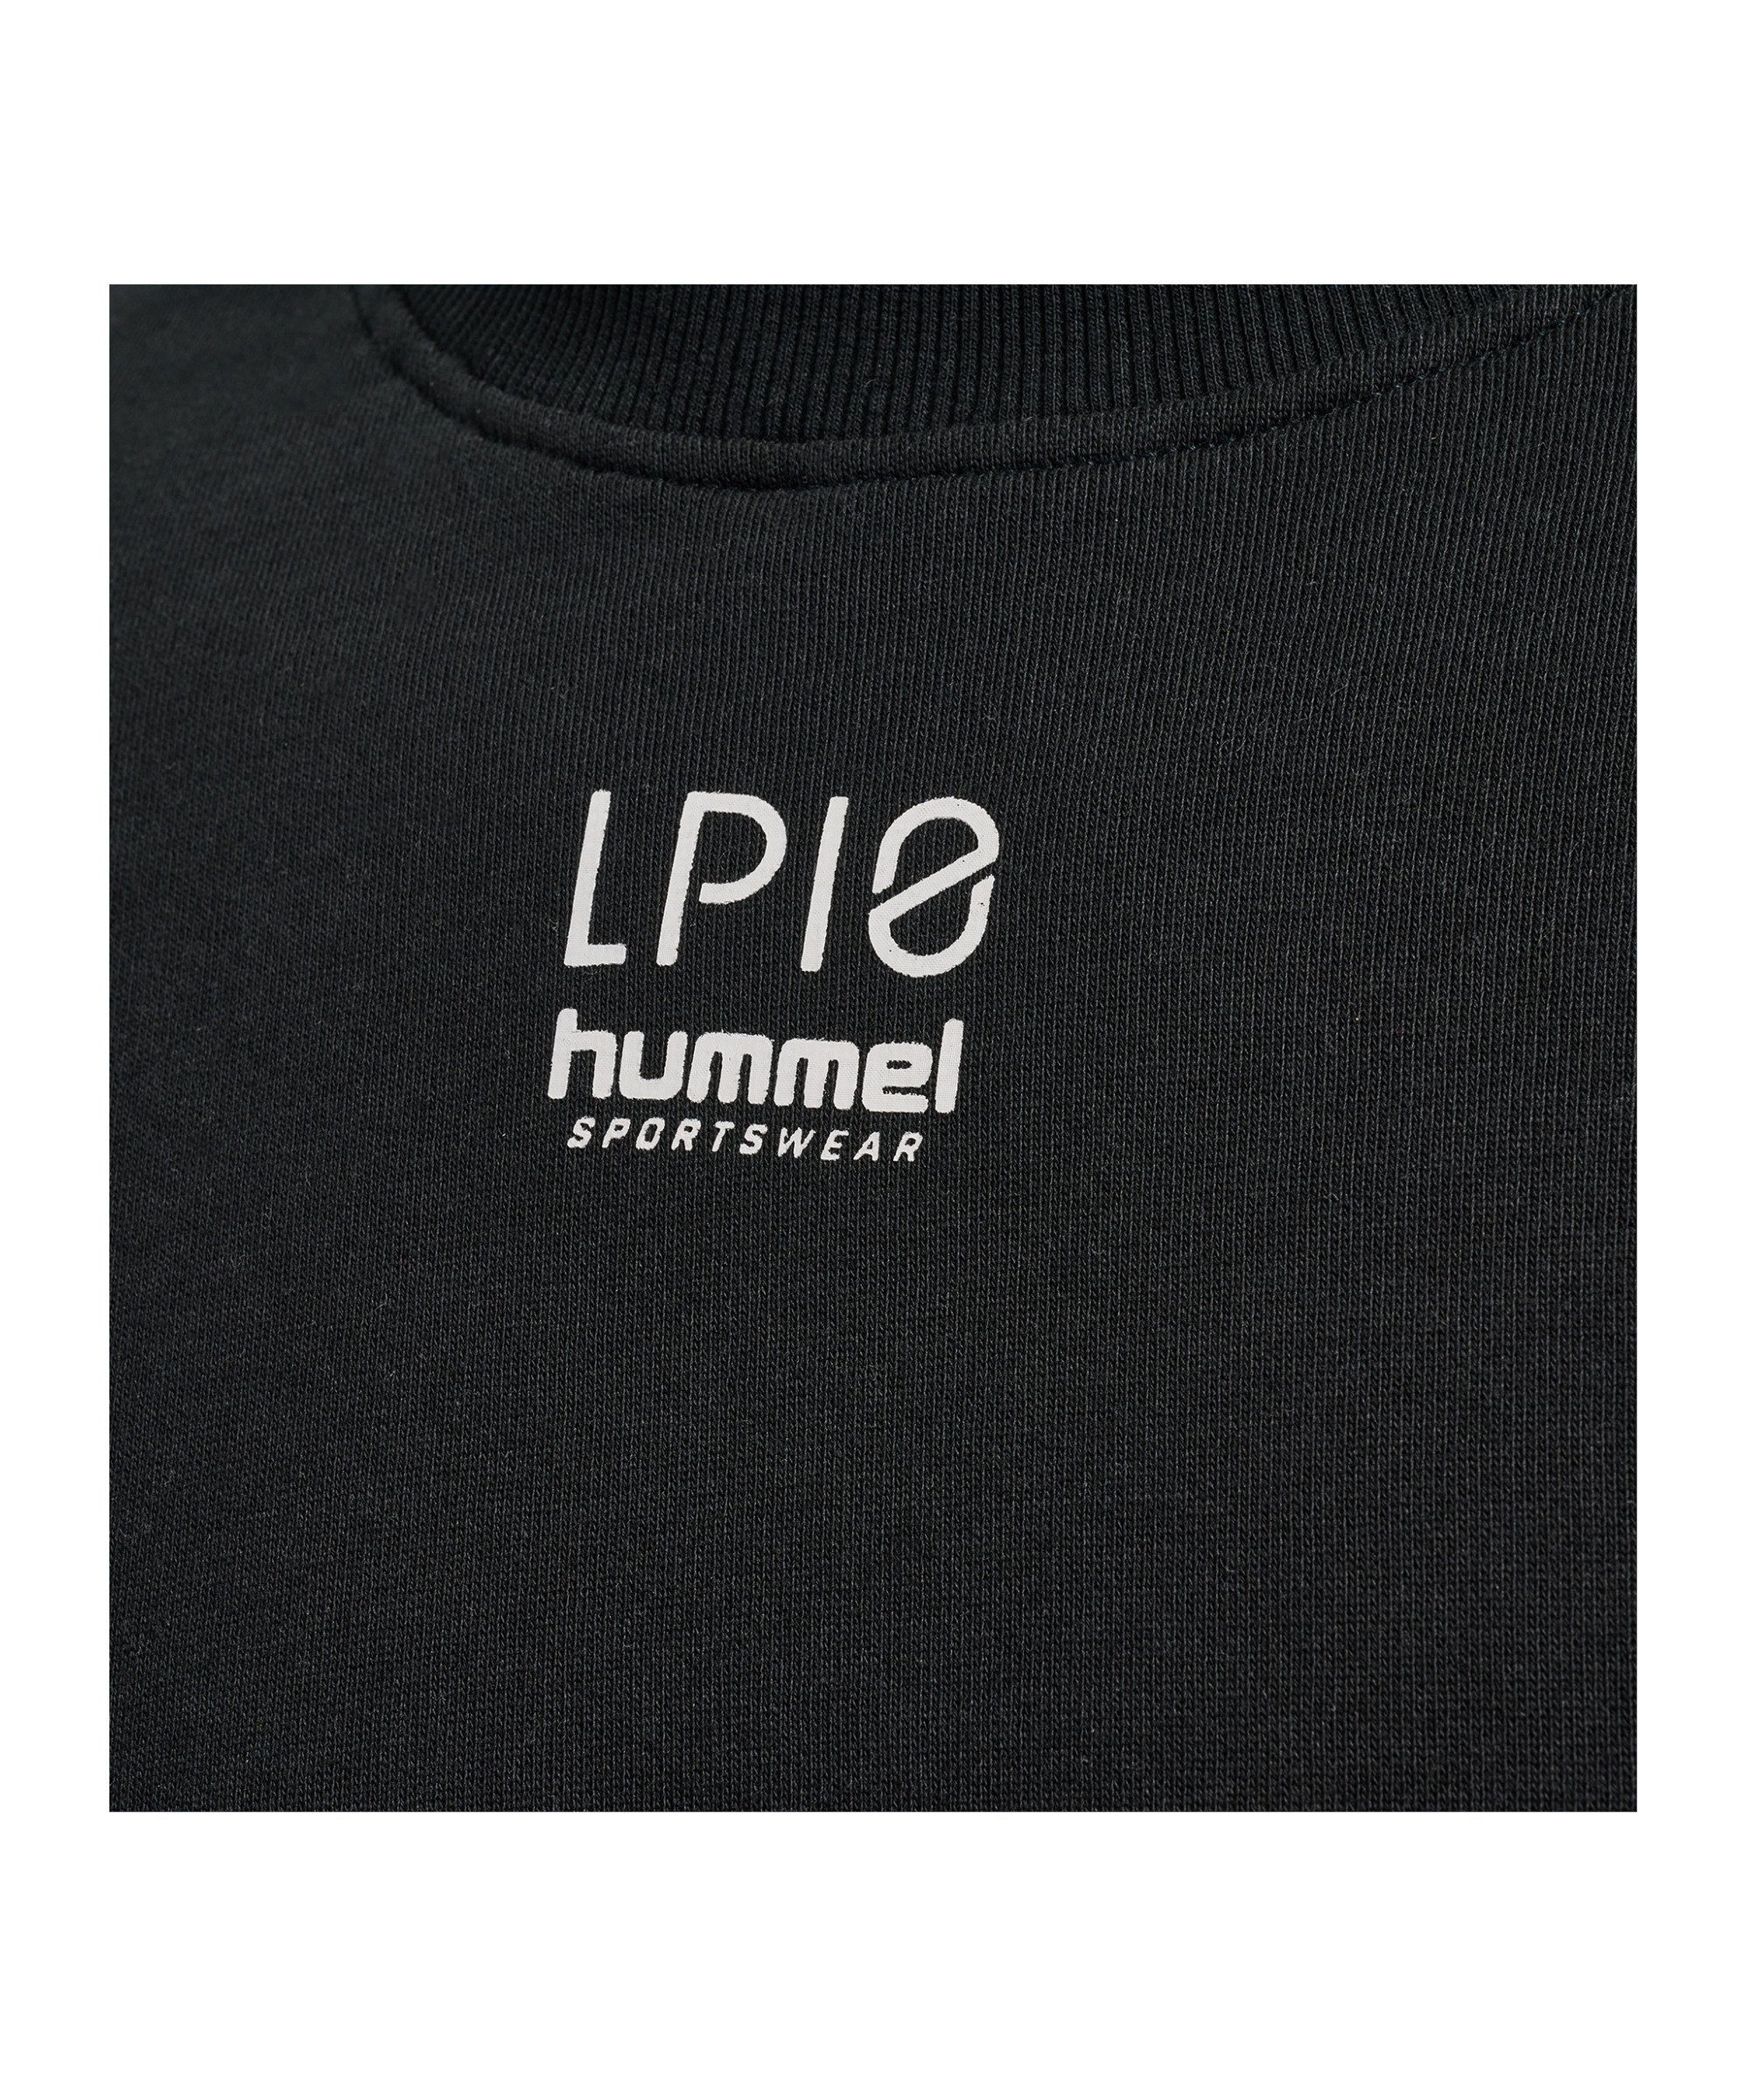 Sweatshirt schwarz hmlLP10 Boxy hummel Sweatshirt